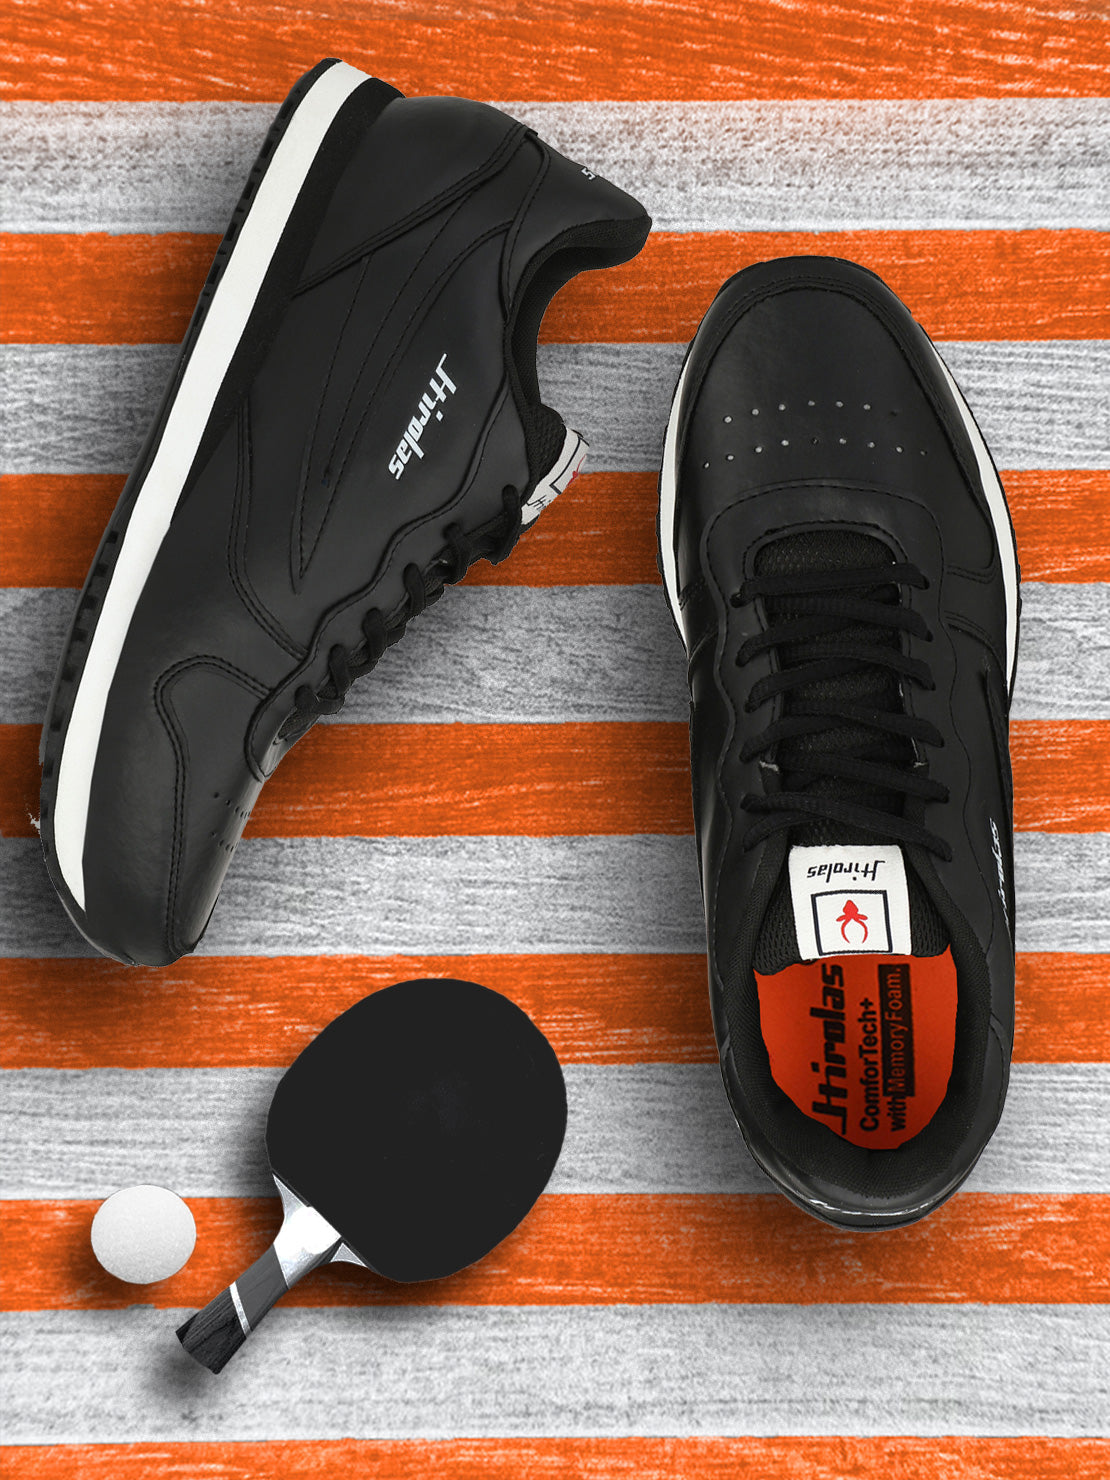 Hirolas® Men's Multisports Shock Absorbing Walking Running Fitness Athletic Training Gym Black Lace Up Sneaker Sport Shoes (HRL2053BLK)